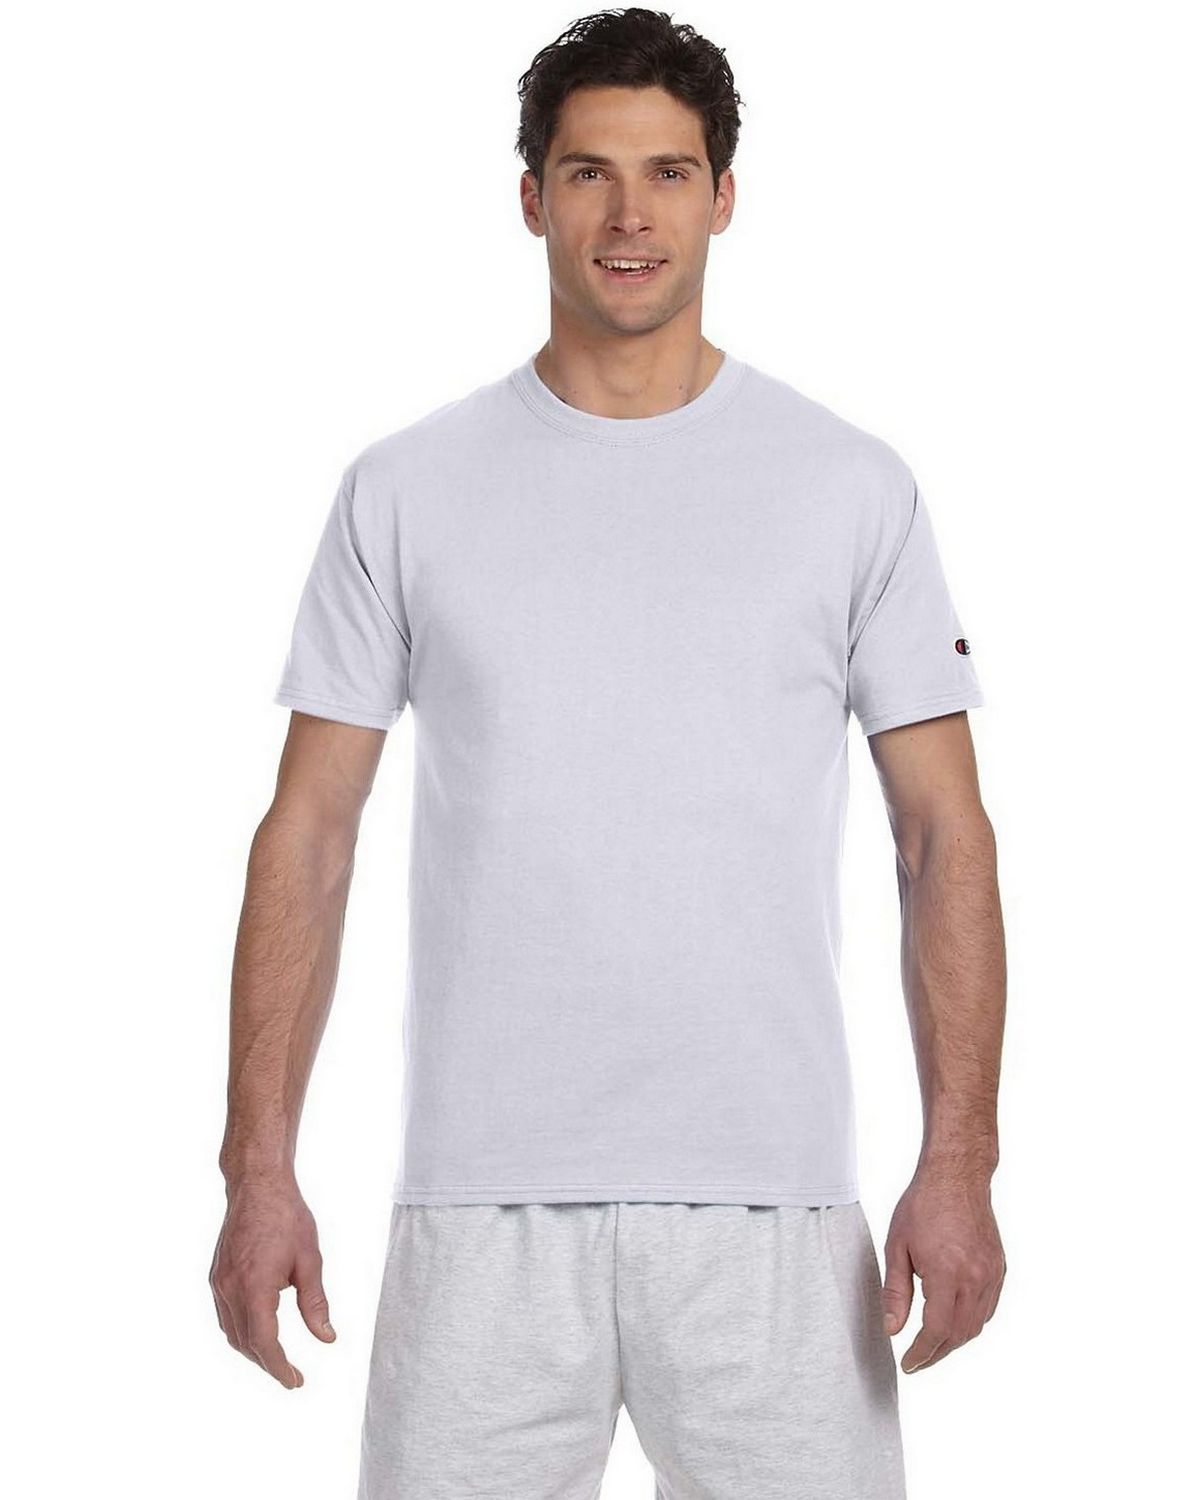 Cotton Tagless Short Sleeve T-Shirt